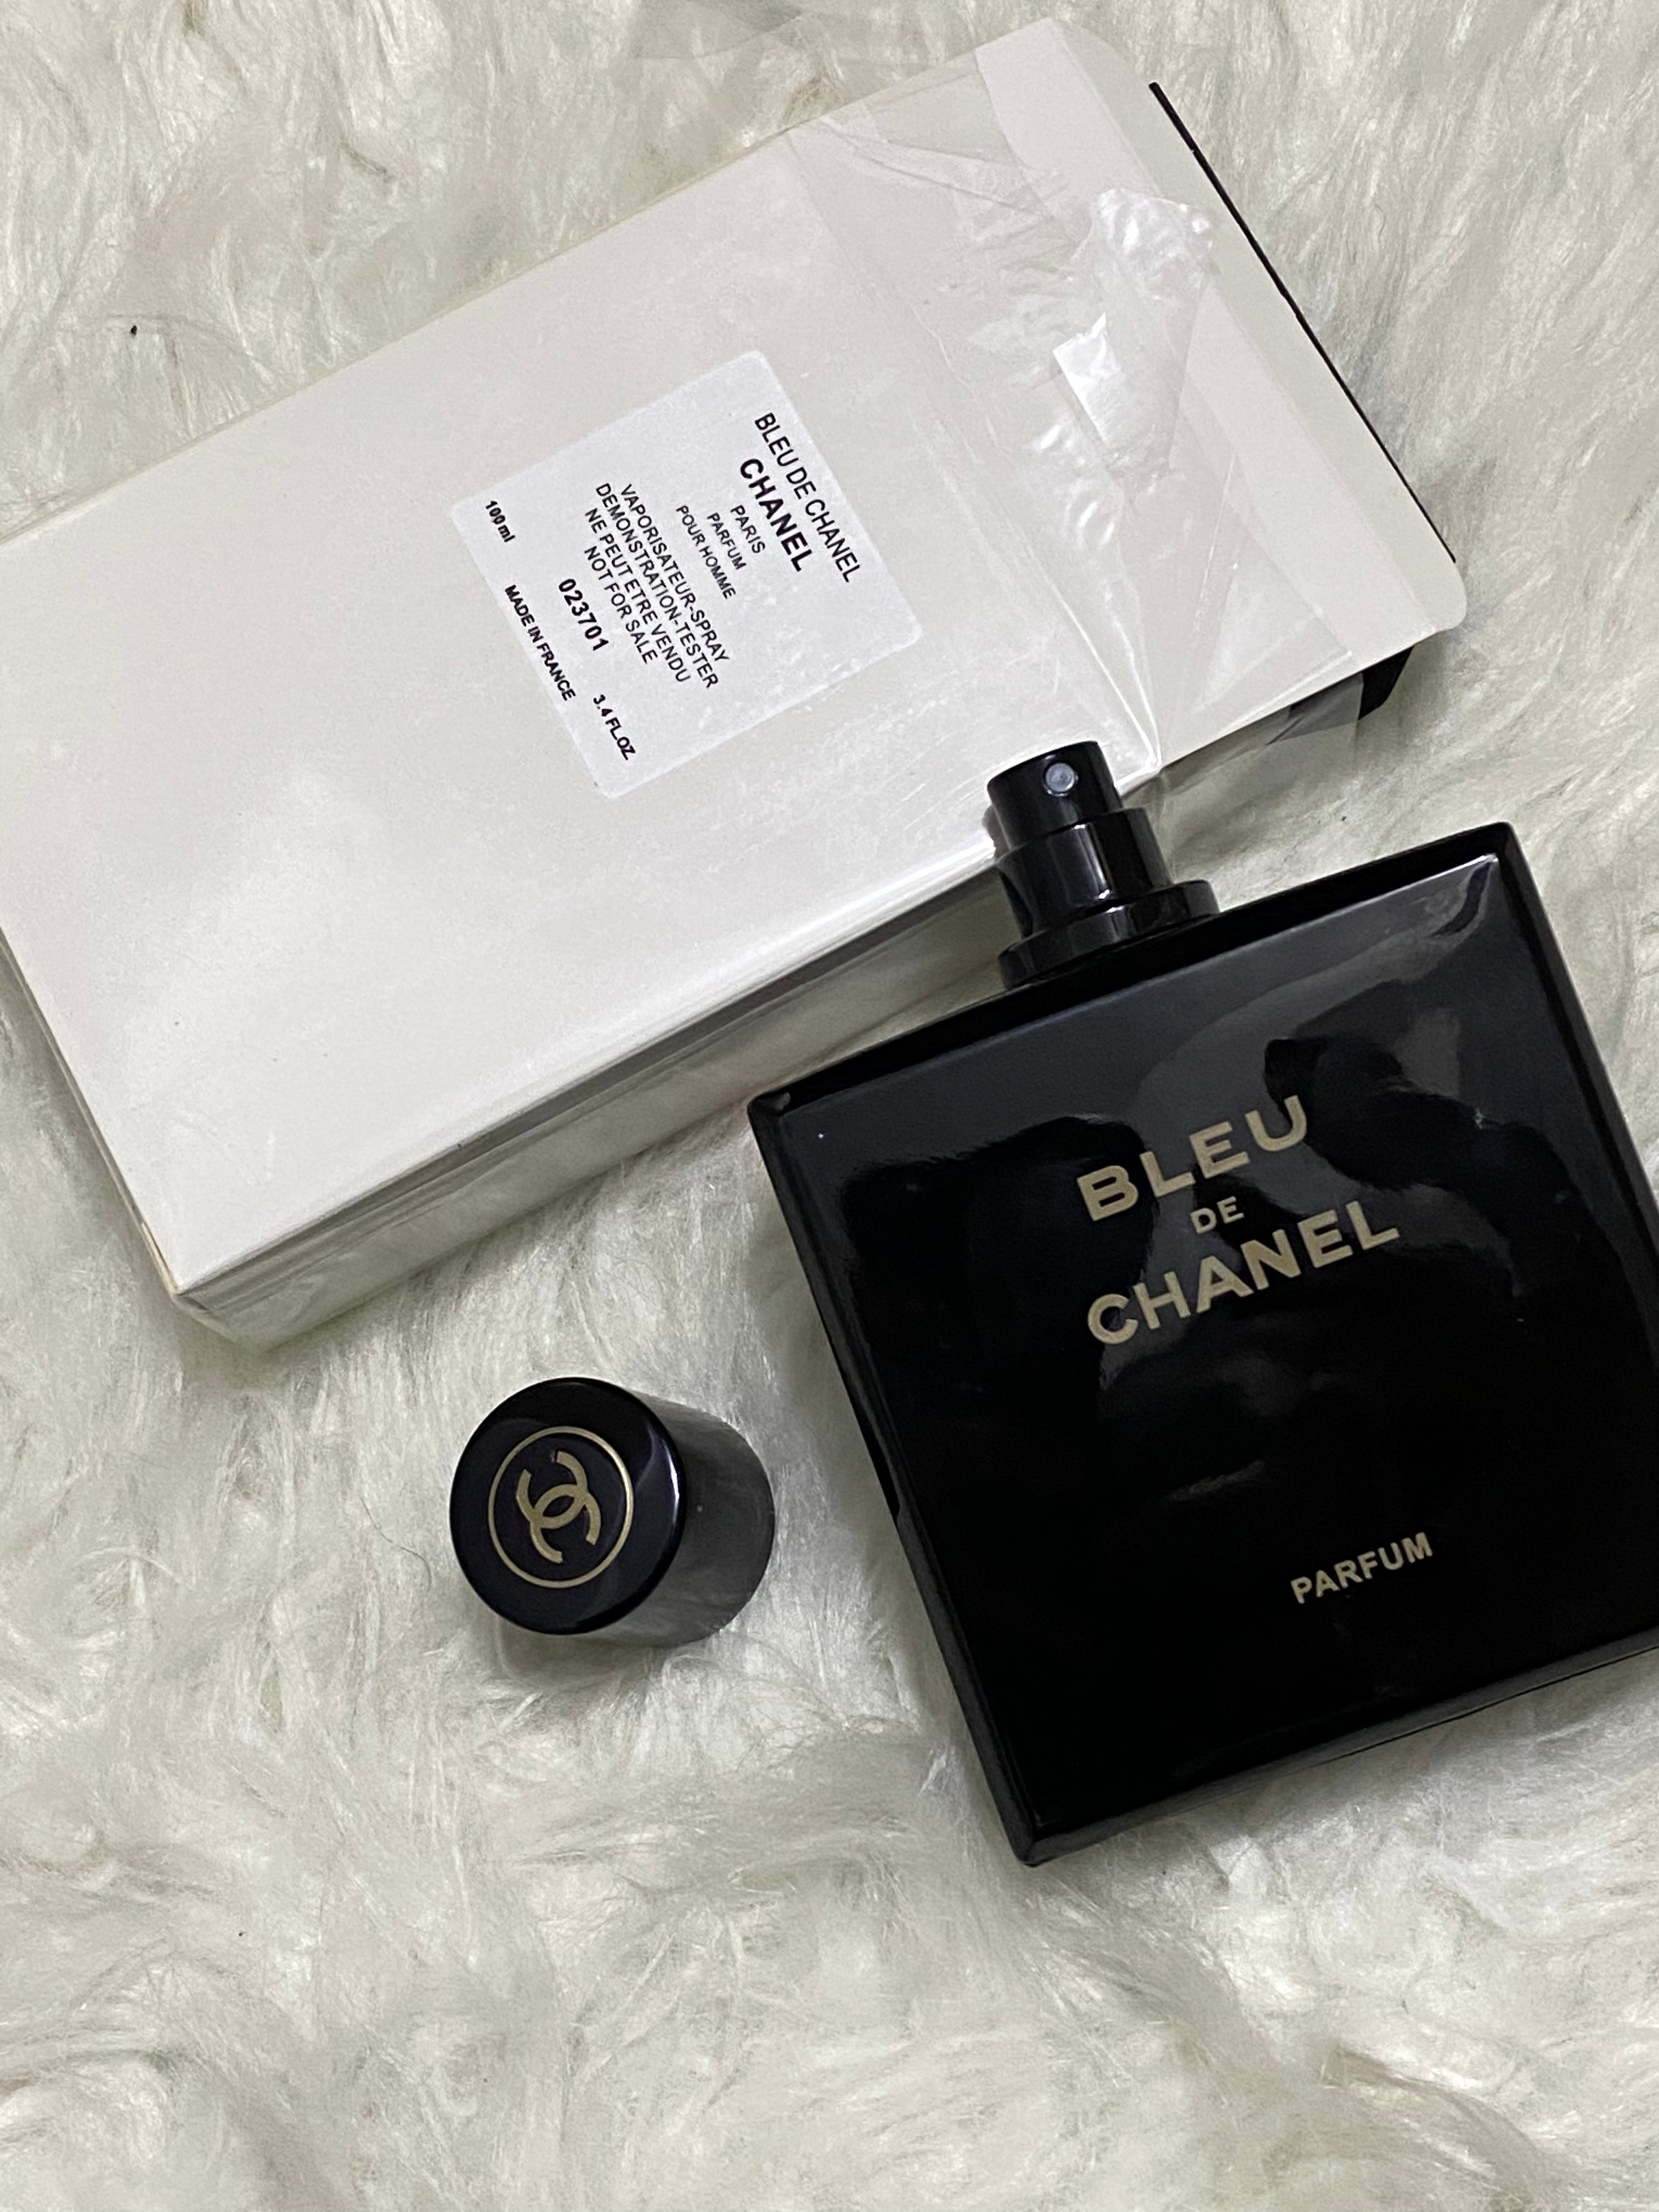 Nước hoa Bleu De Chanel của hãng Chanel